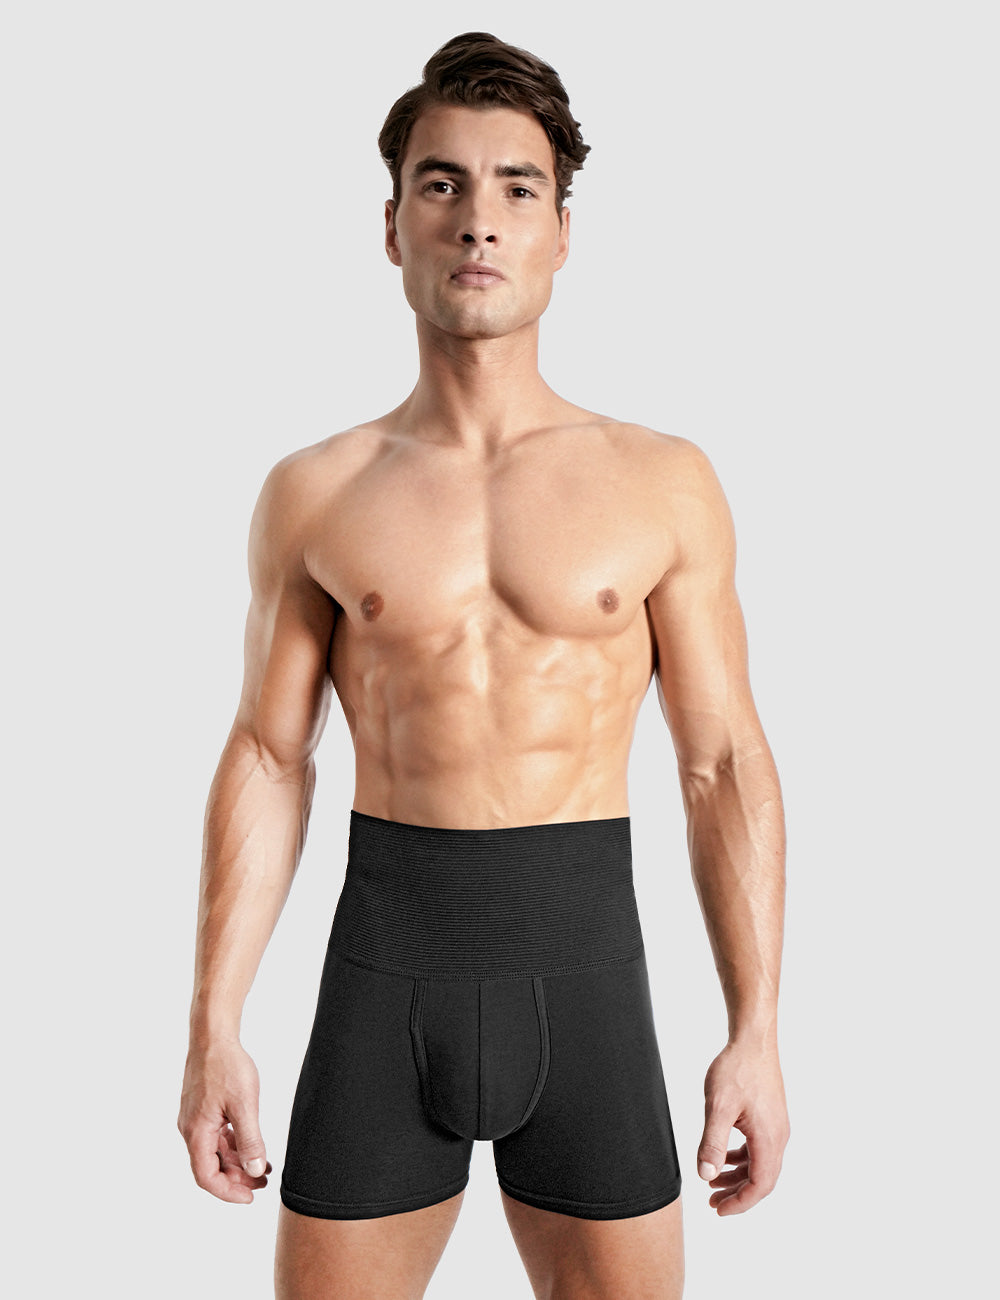 VASLANDA Men Shaper Underwear Tummy Control Shorts High Waist Slimming  Compression Shaping Thigh Boxer Briefs Shapewear